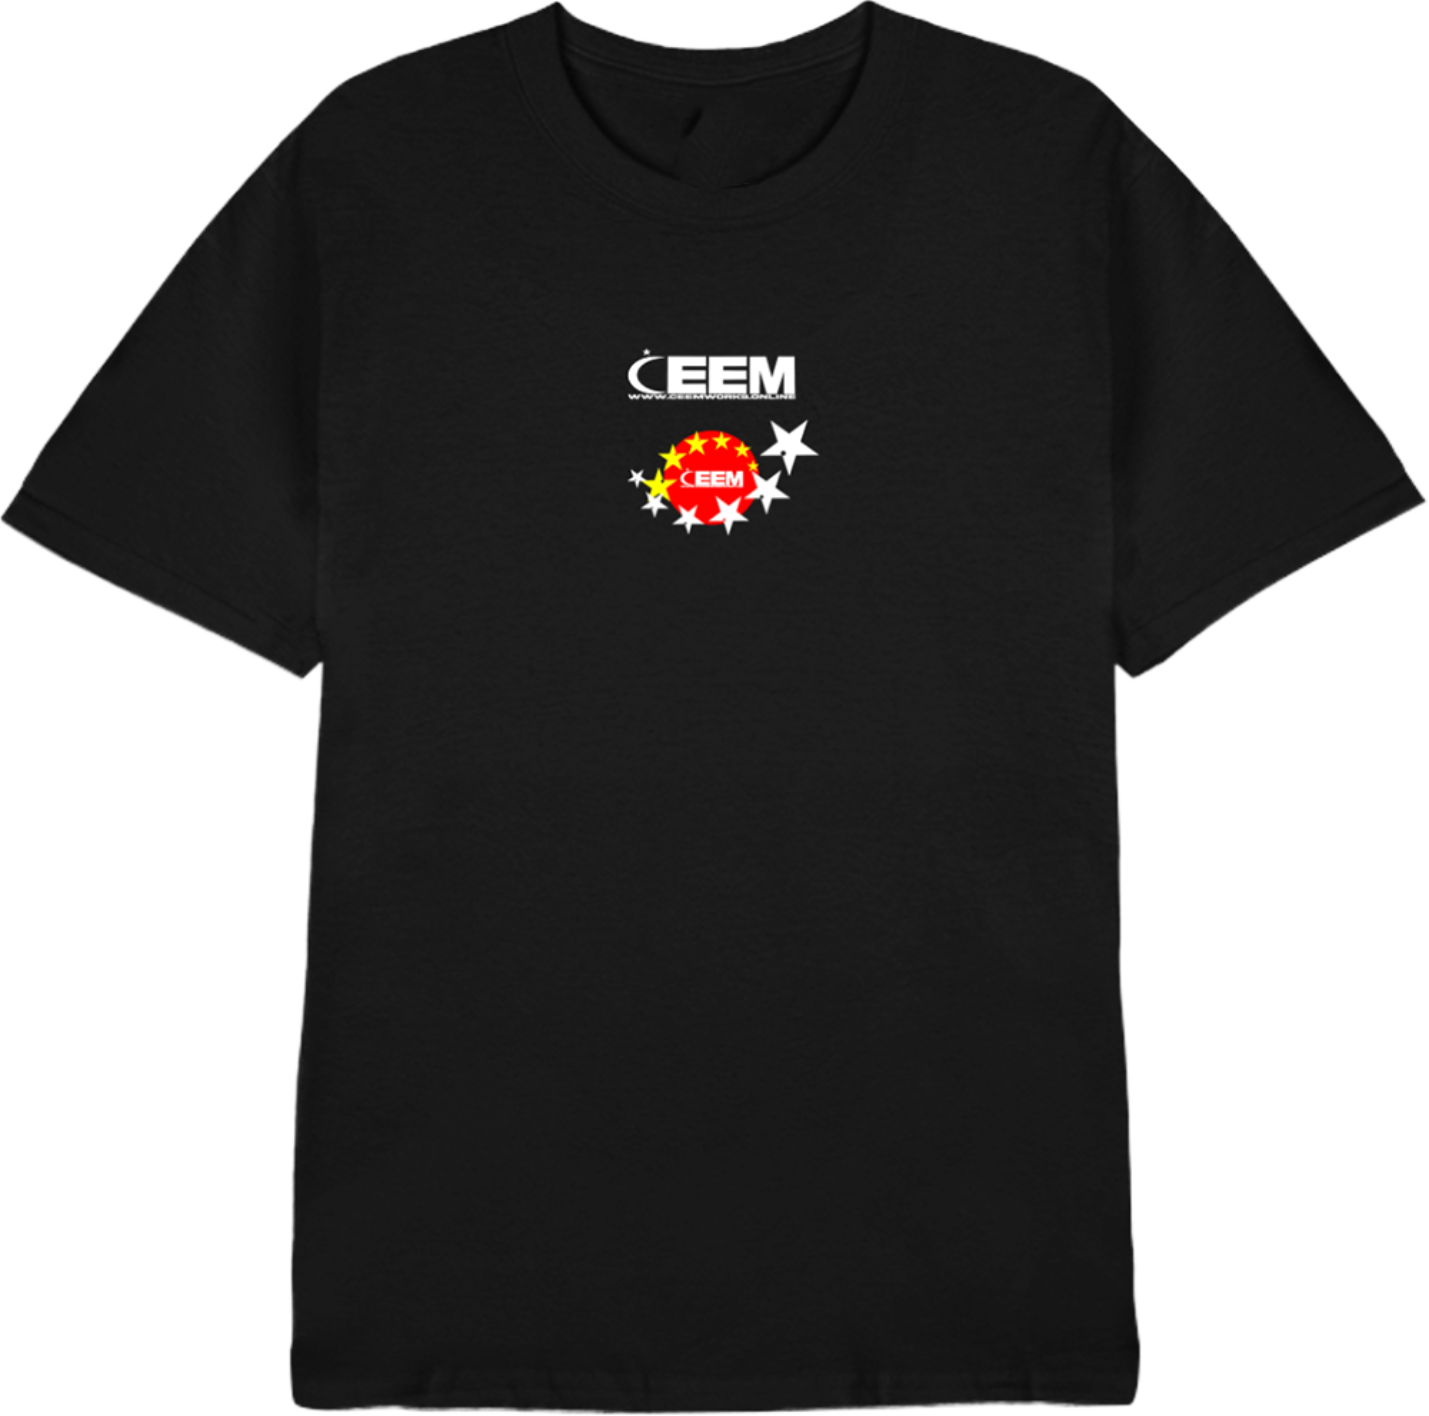 ceemworks one t-shirt